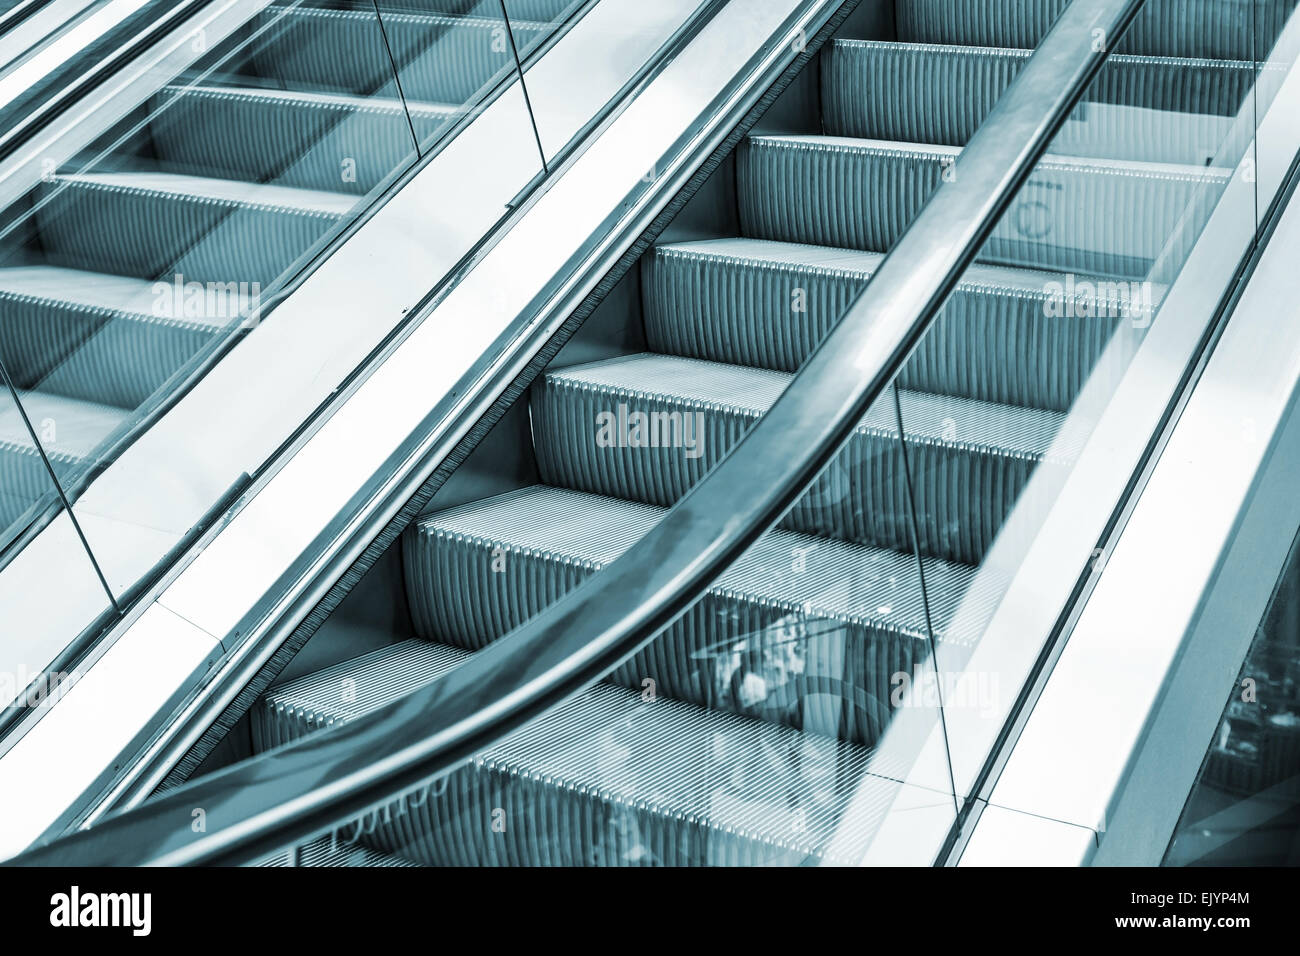 Shining metal escalator moving up, blue toned monochrome photo Stock Photo